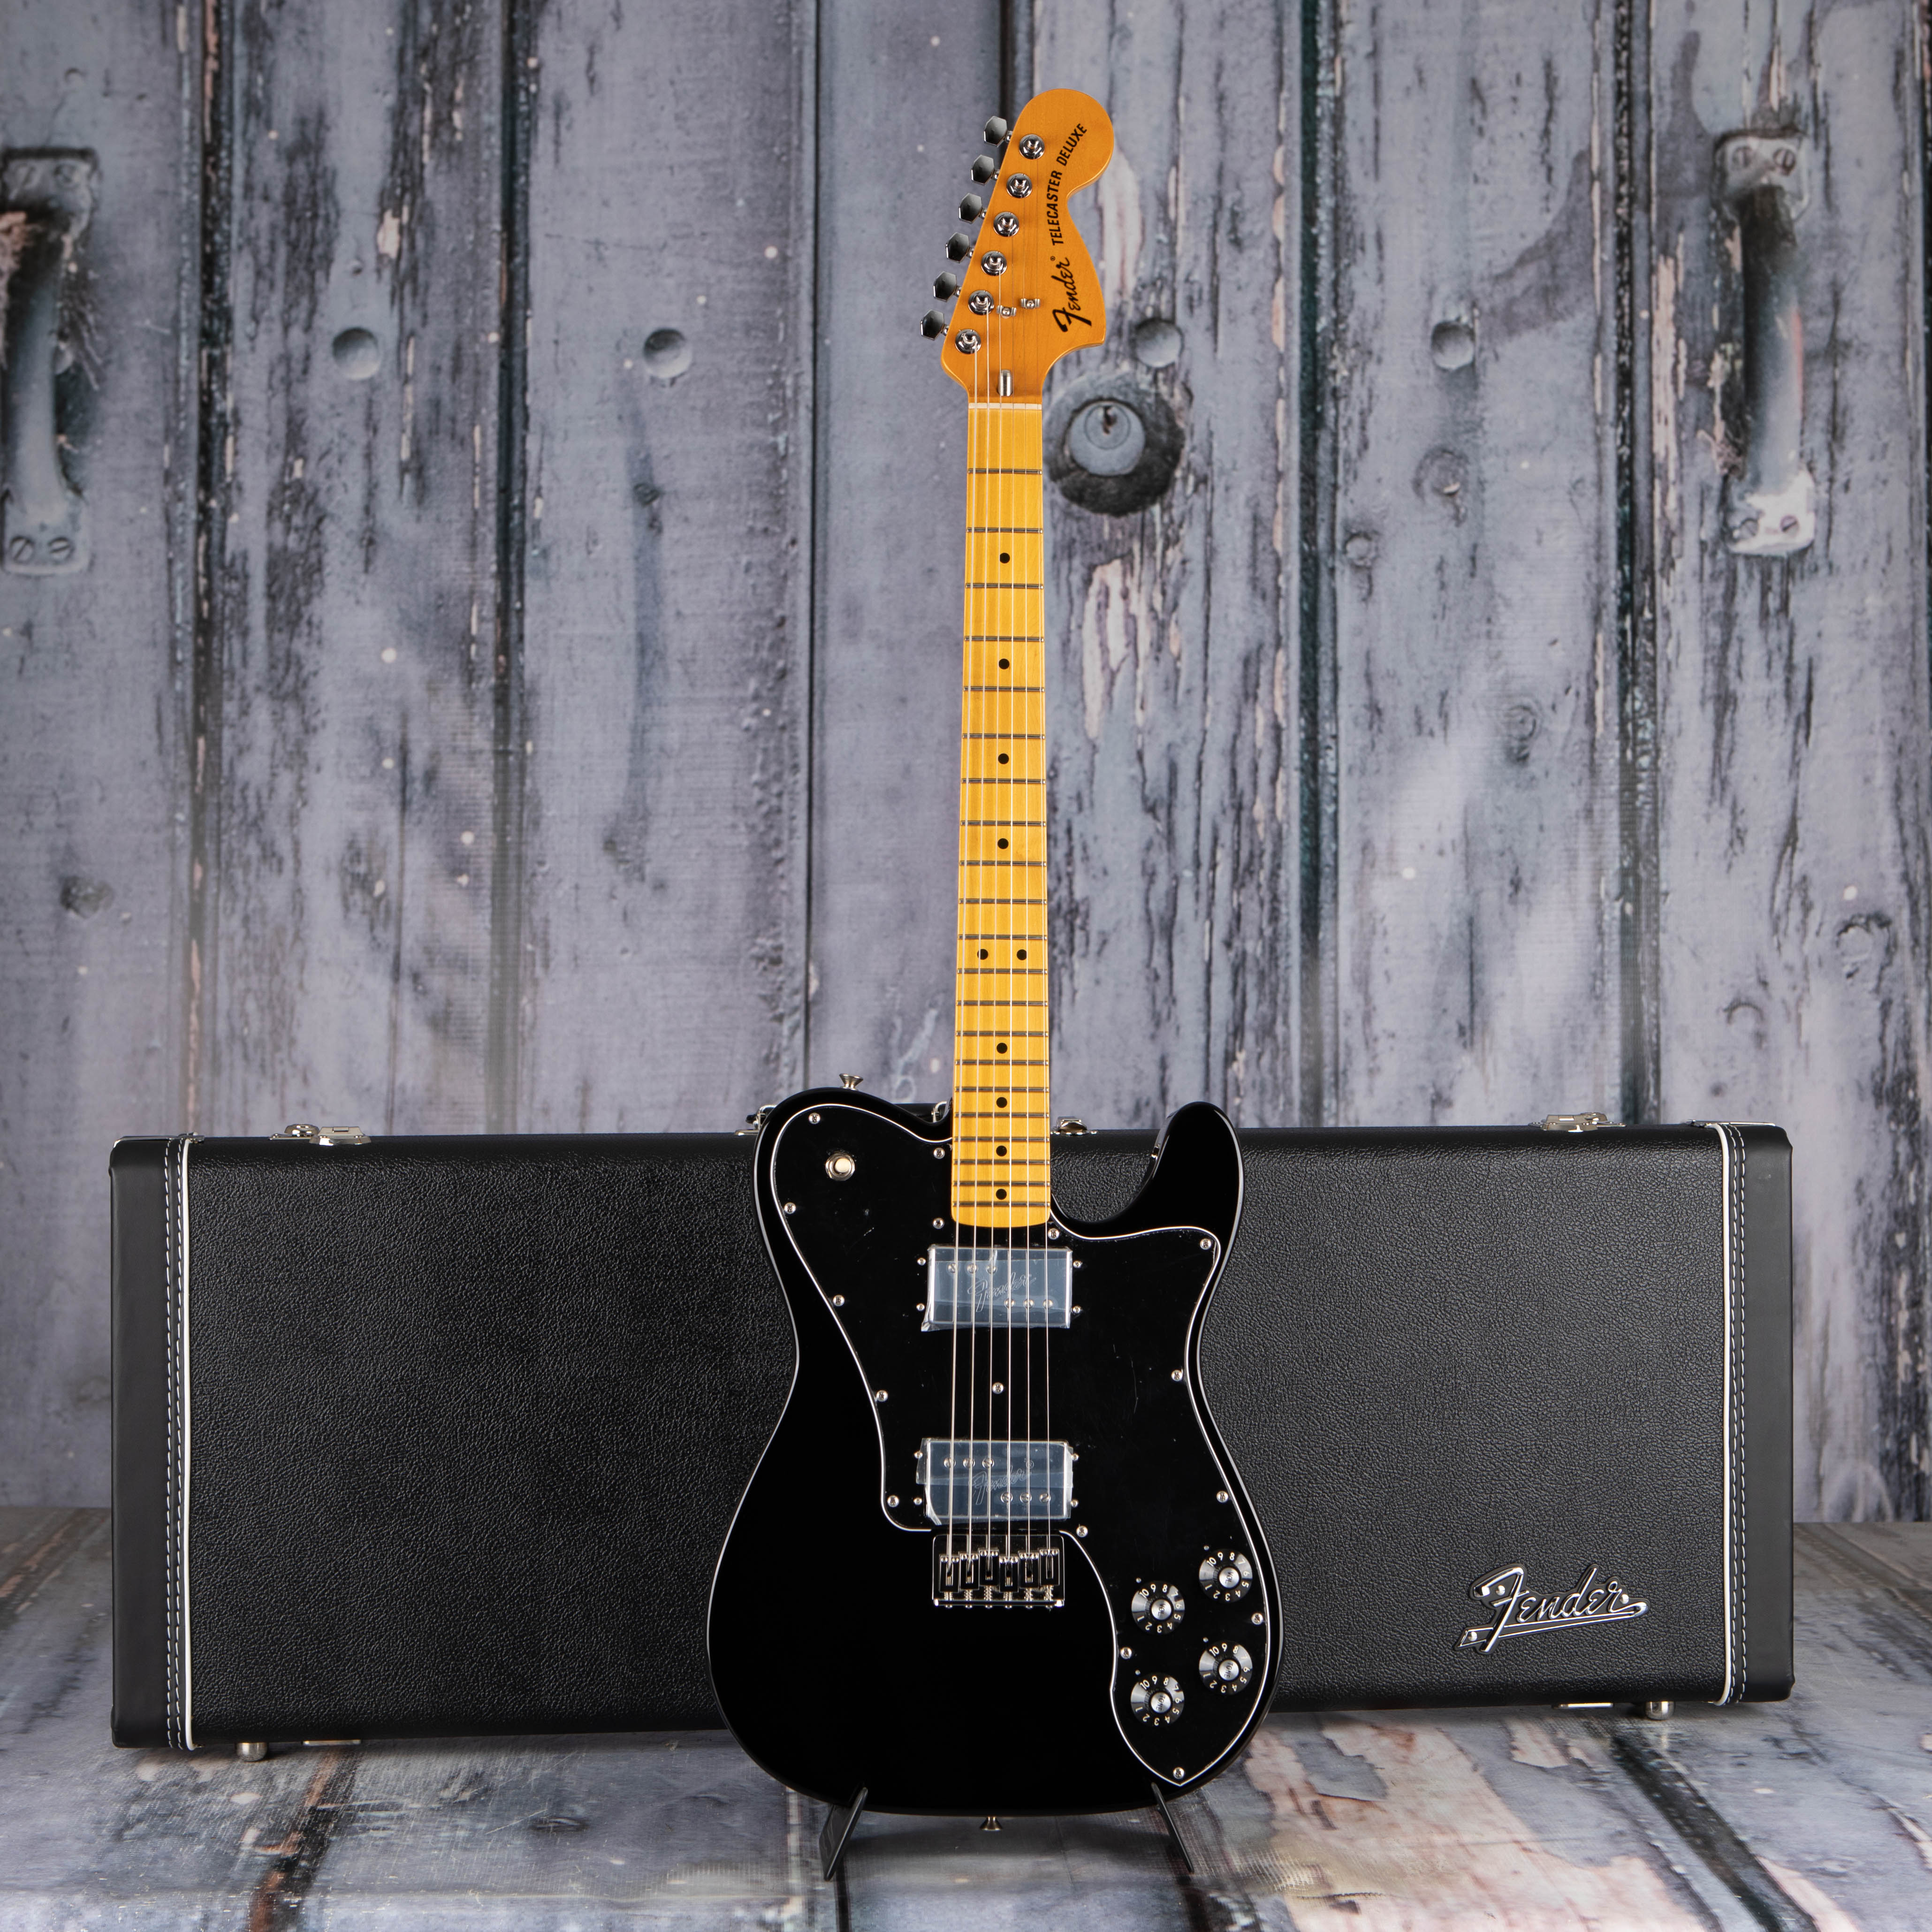 Used Fender American Vintage II 1975 Telecaster Deluxe Electric Guitar, Black, case